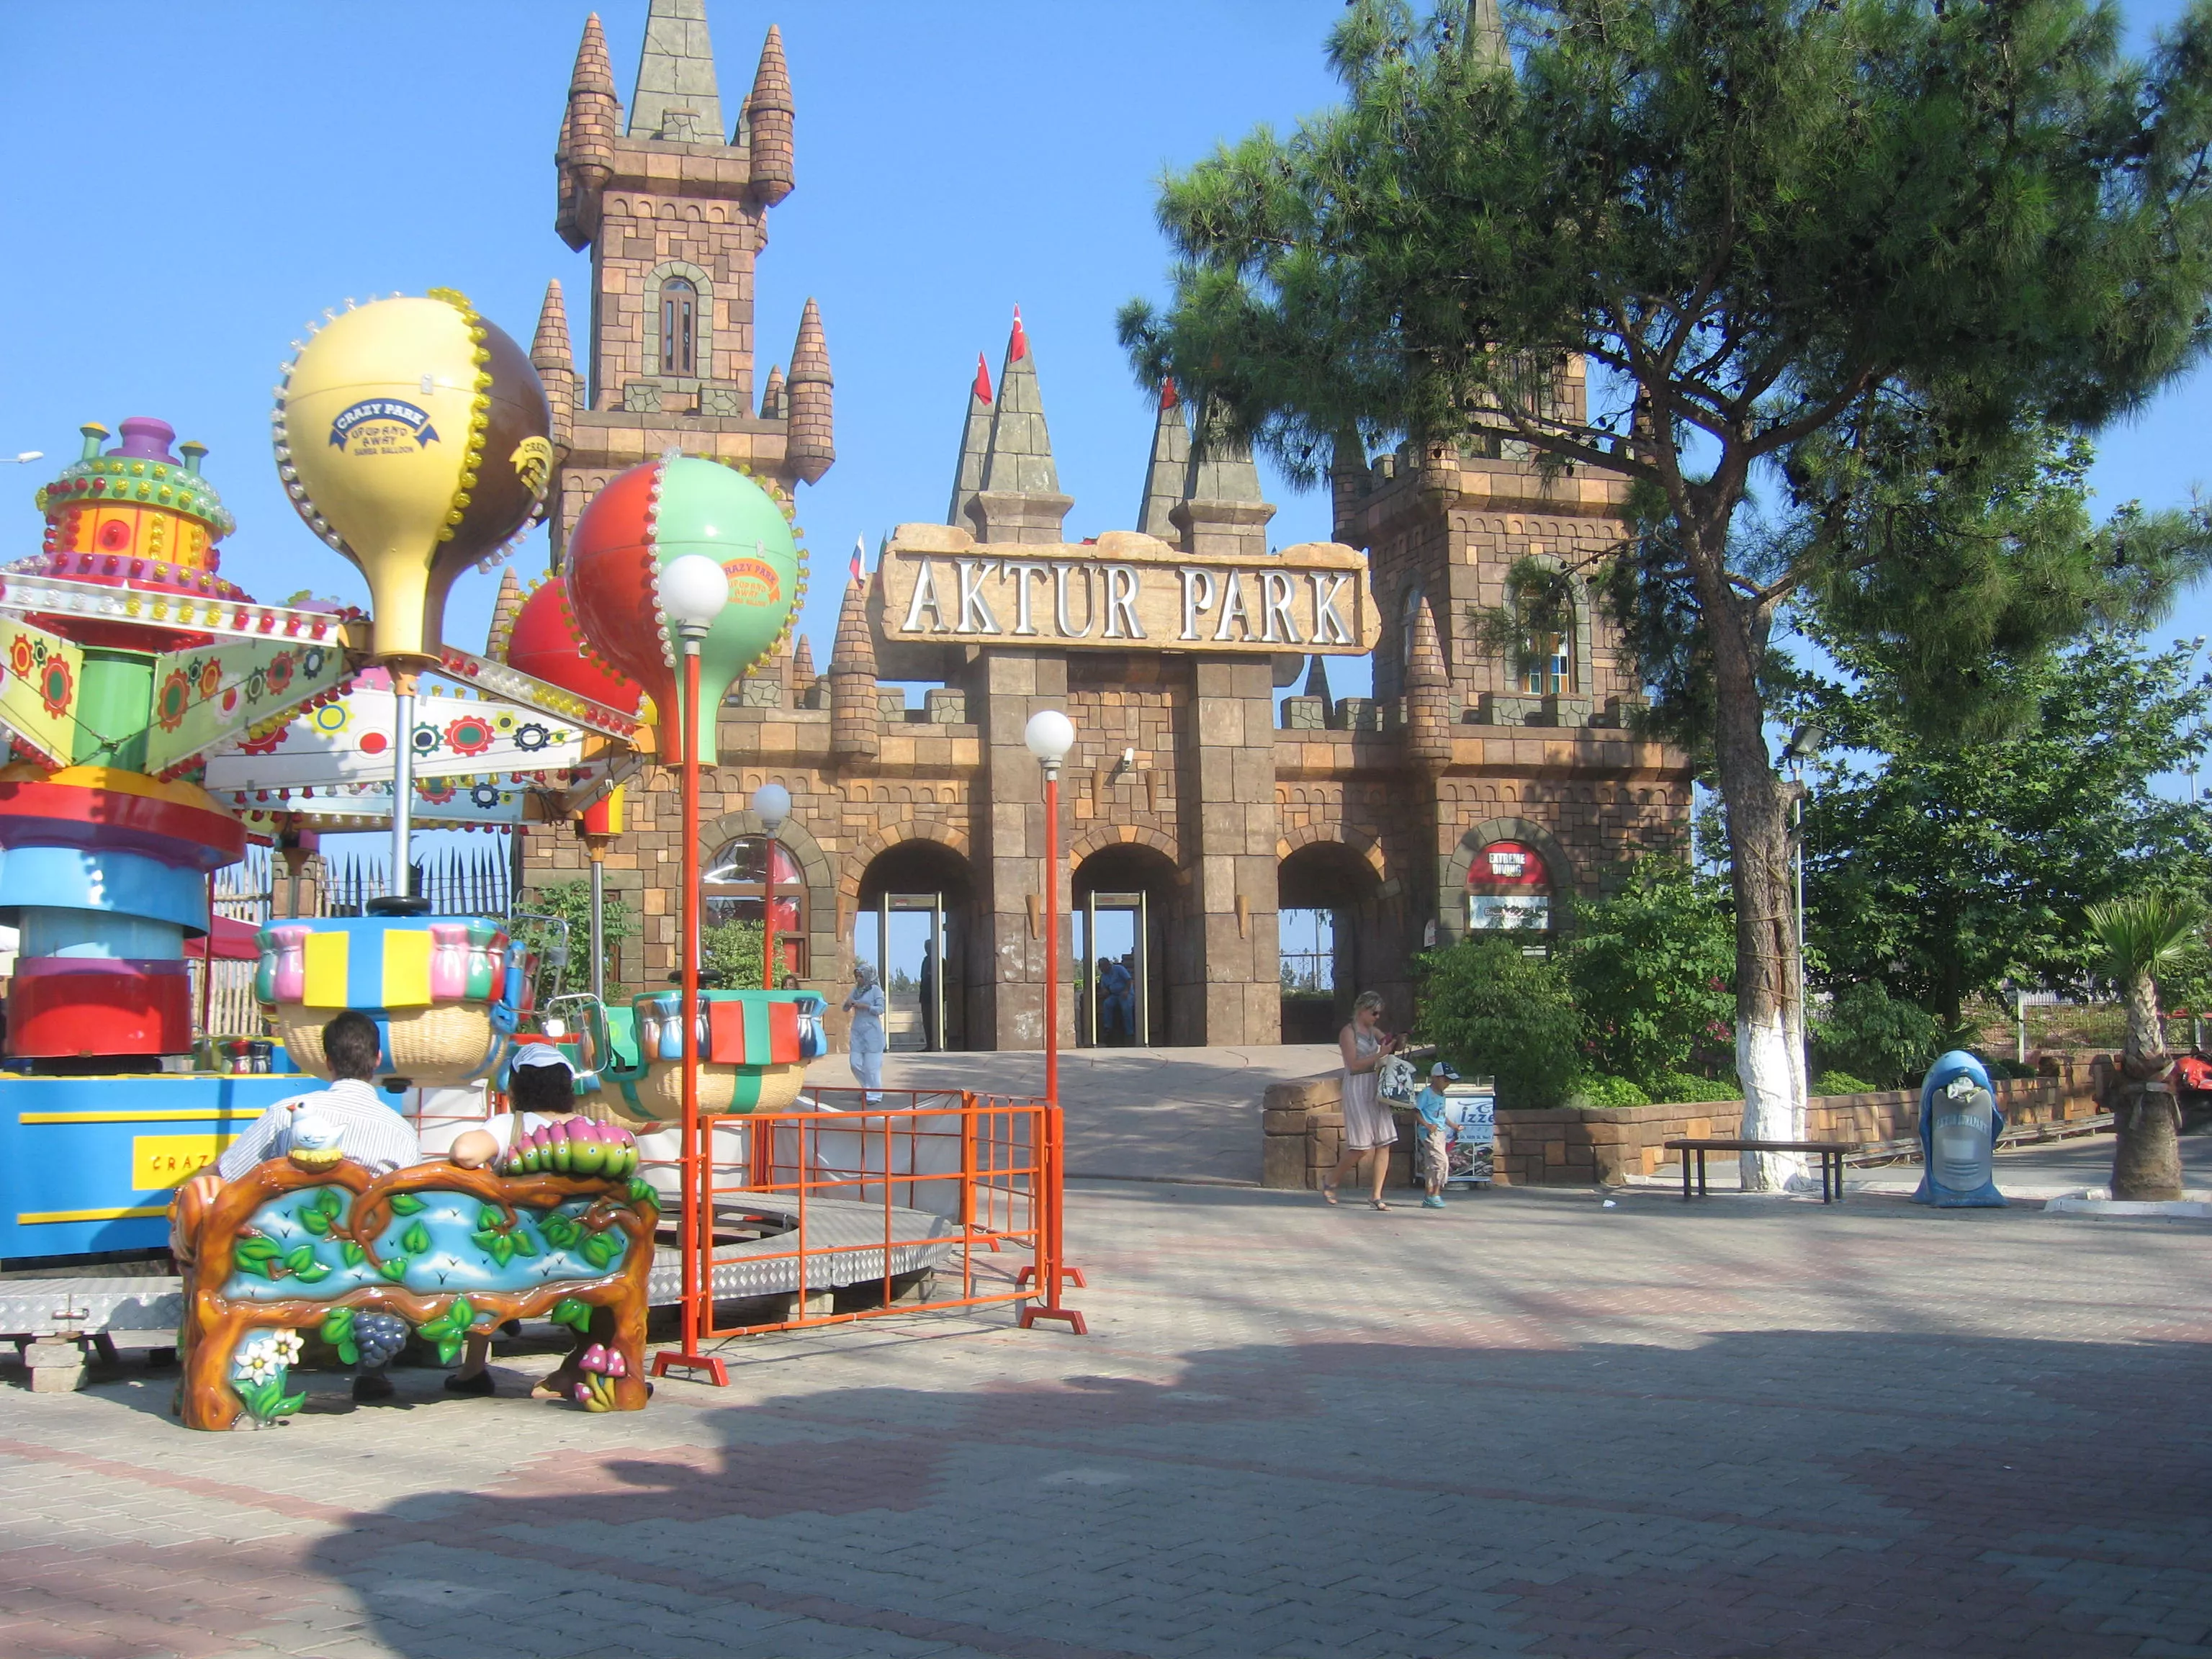 Aktur Park in Turkey, Central Asia | Amusement Parks & Rides - Rated 3.5